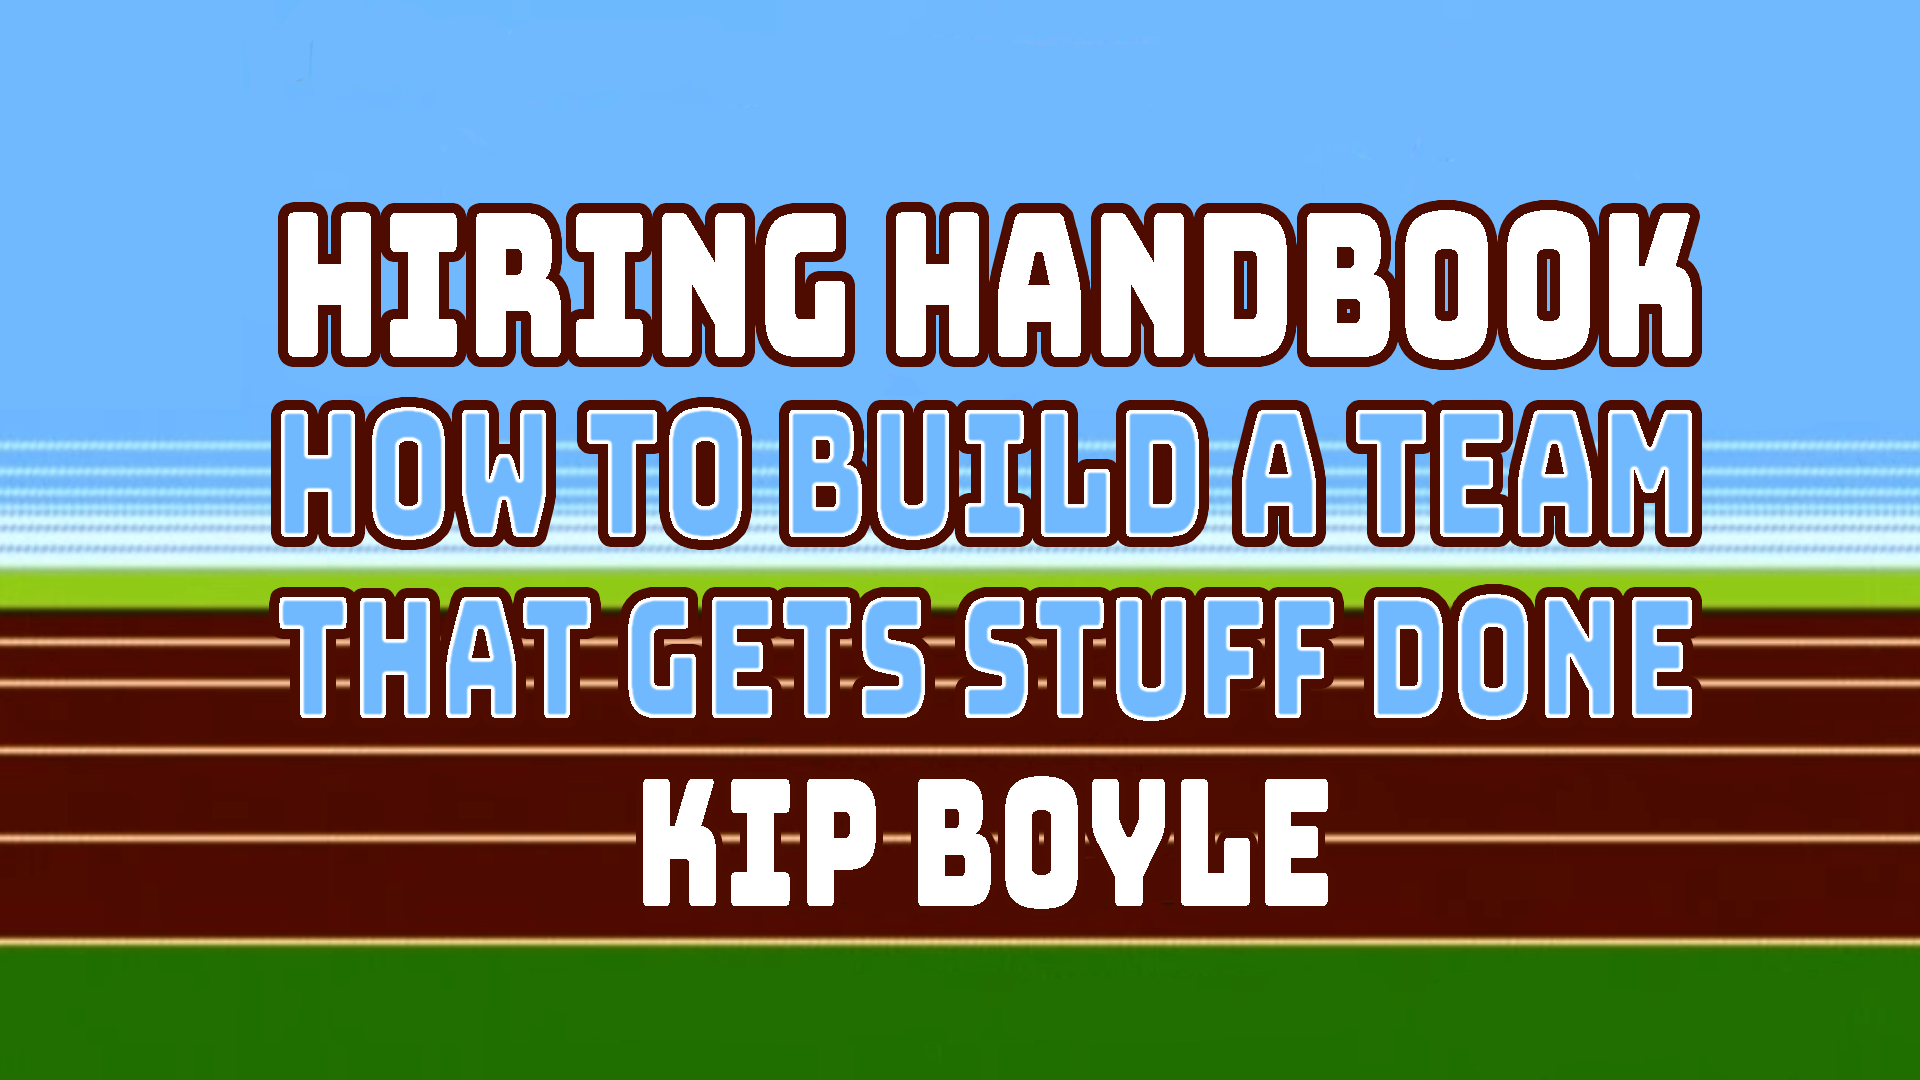 Hiring Handbook: How to Build an InfoSec Team that Gets Stuff Done w/ Kip Boyle